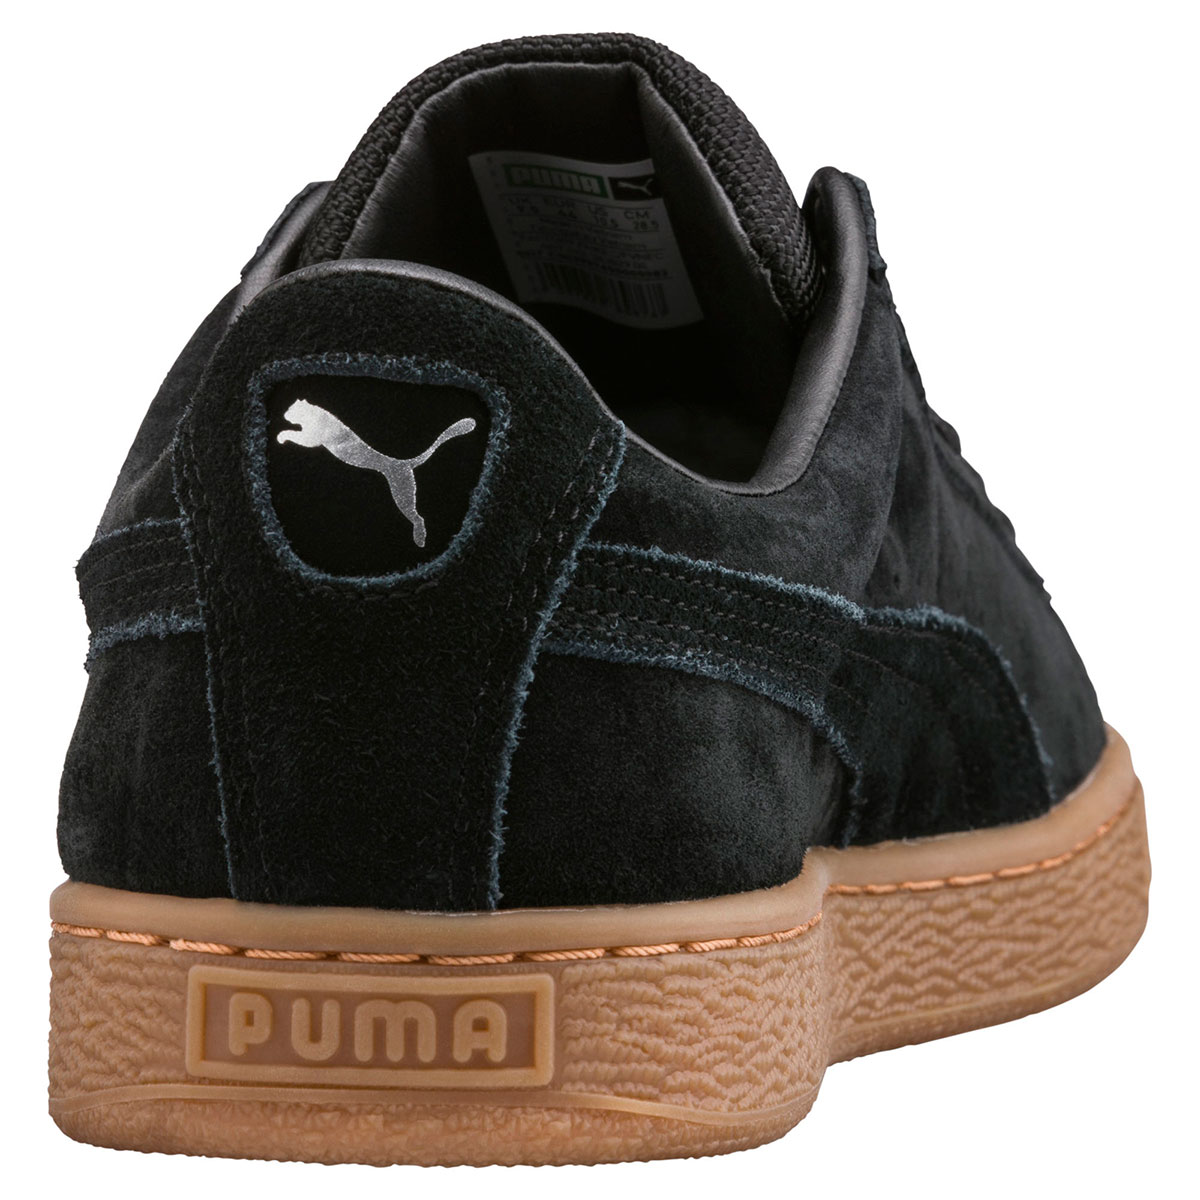 Puma Basket Classic Weatherproof black  363829-04